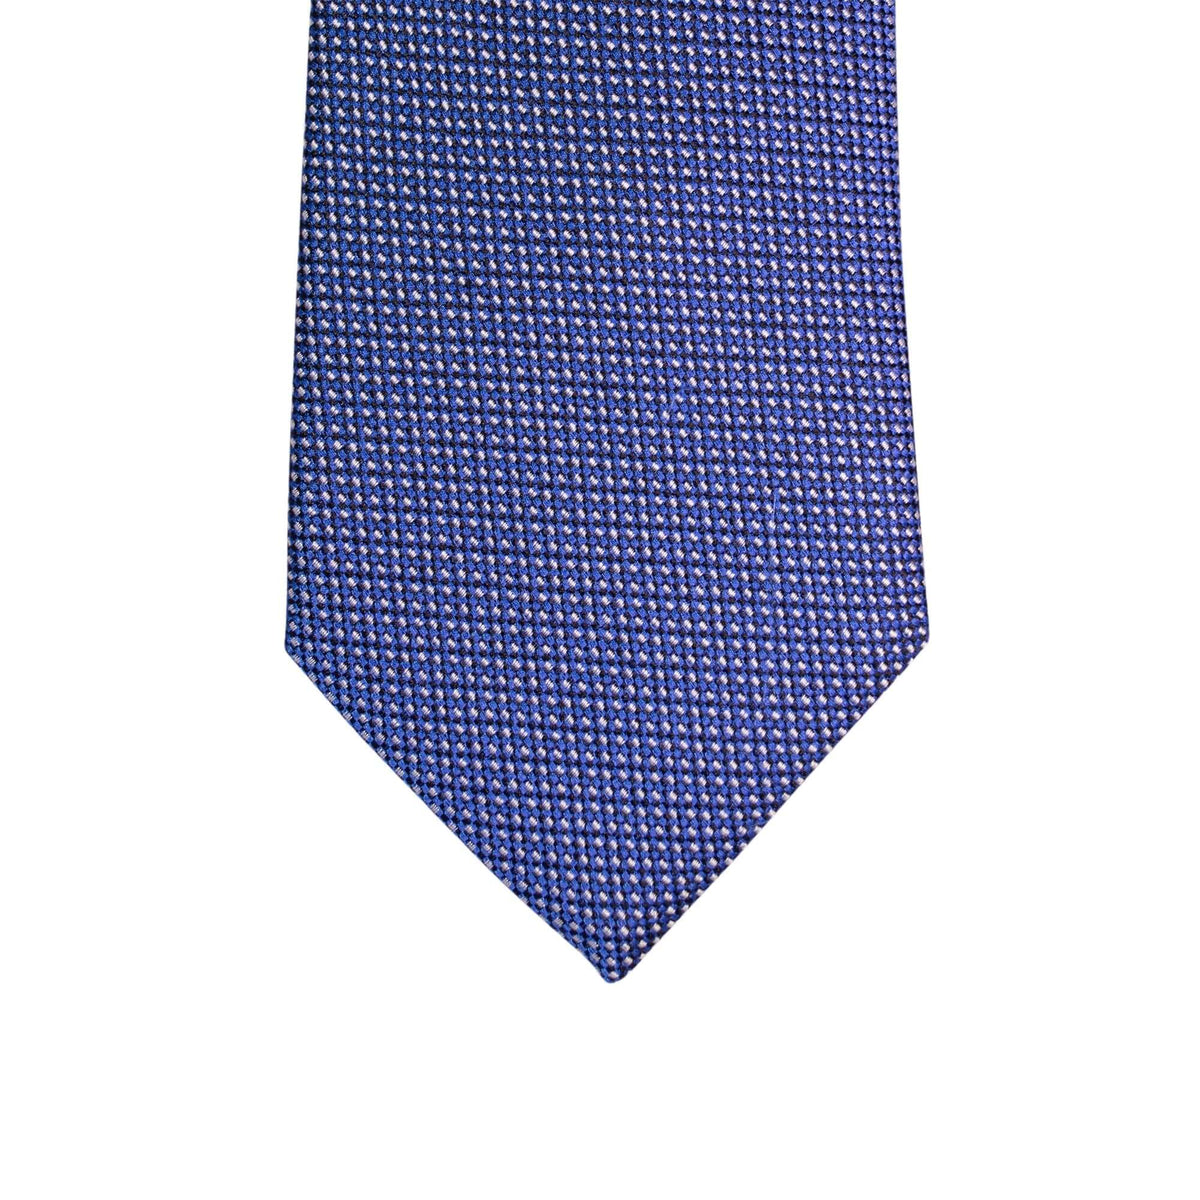 Azthom Blue with White Micro-Dots Pattern Silk Tie - 8cm-Neckties-A.Azthom-Cufflinks.com.sg